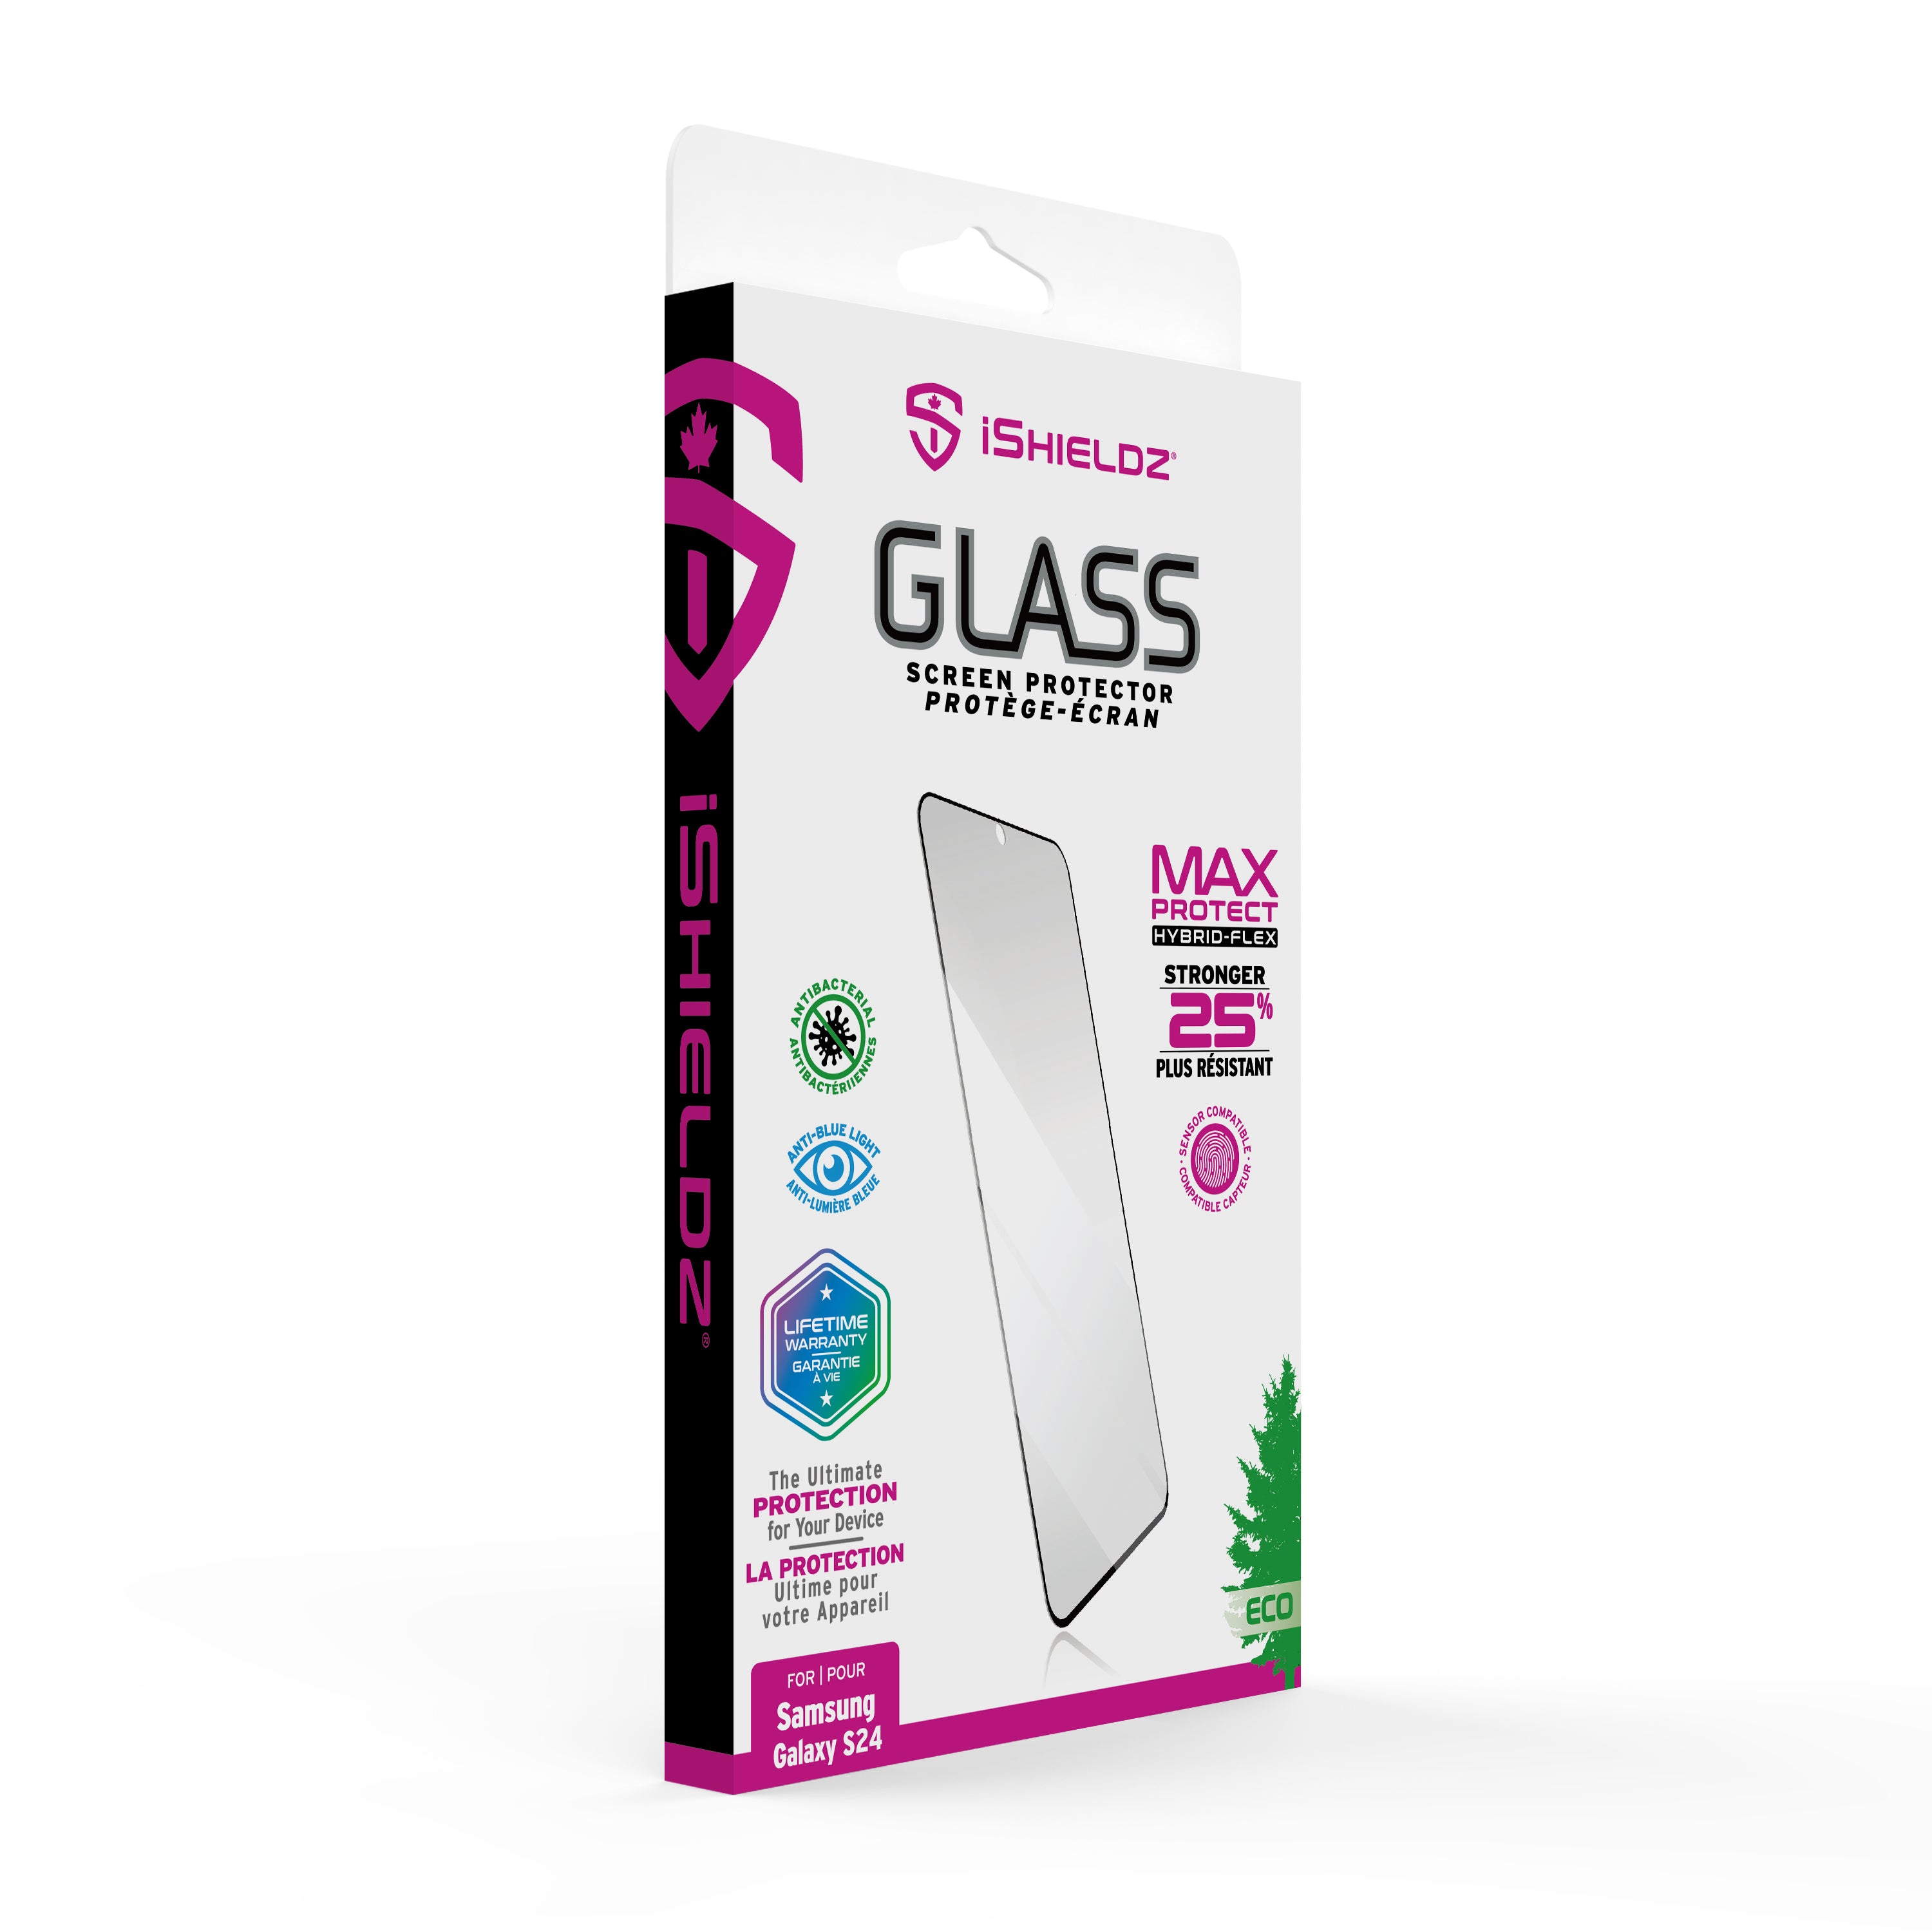 iShieldz MAX PROTECT Hybrid-Flex Glass Screen Protector for Galaxy S24 Series